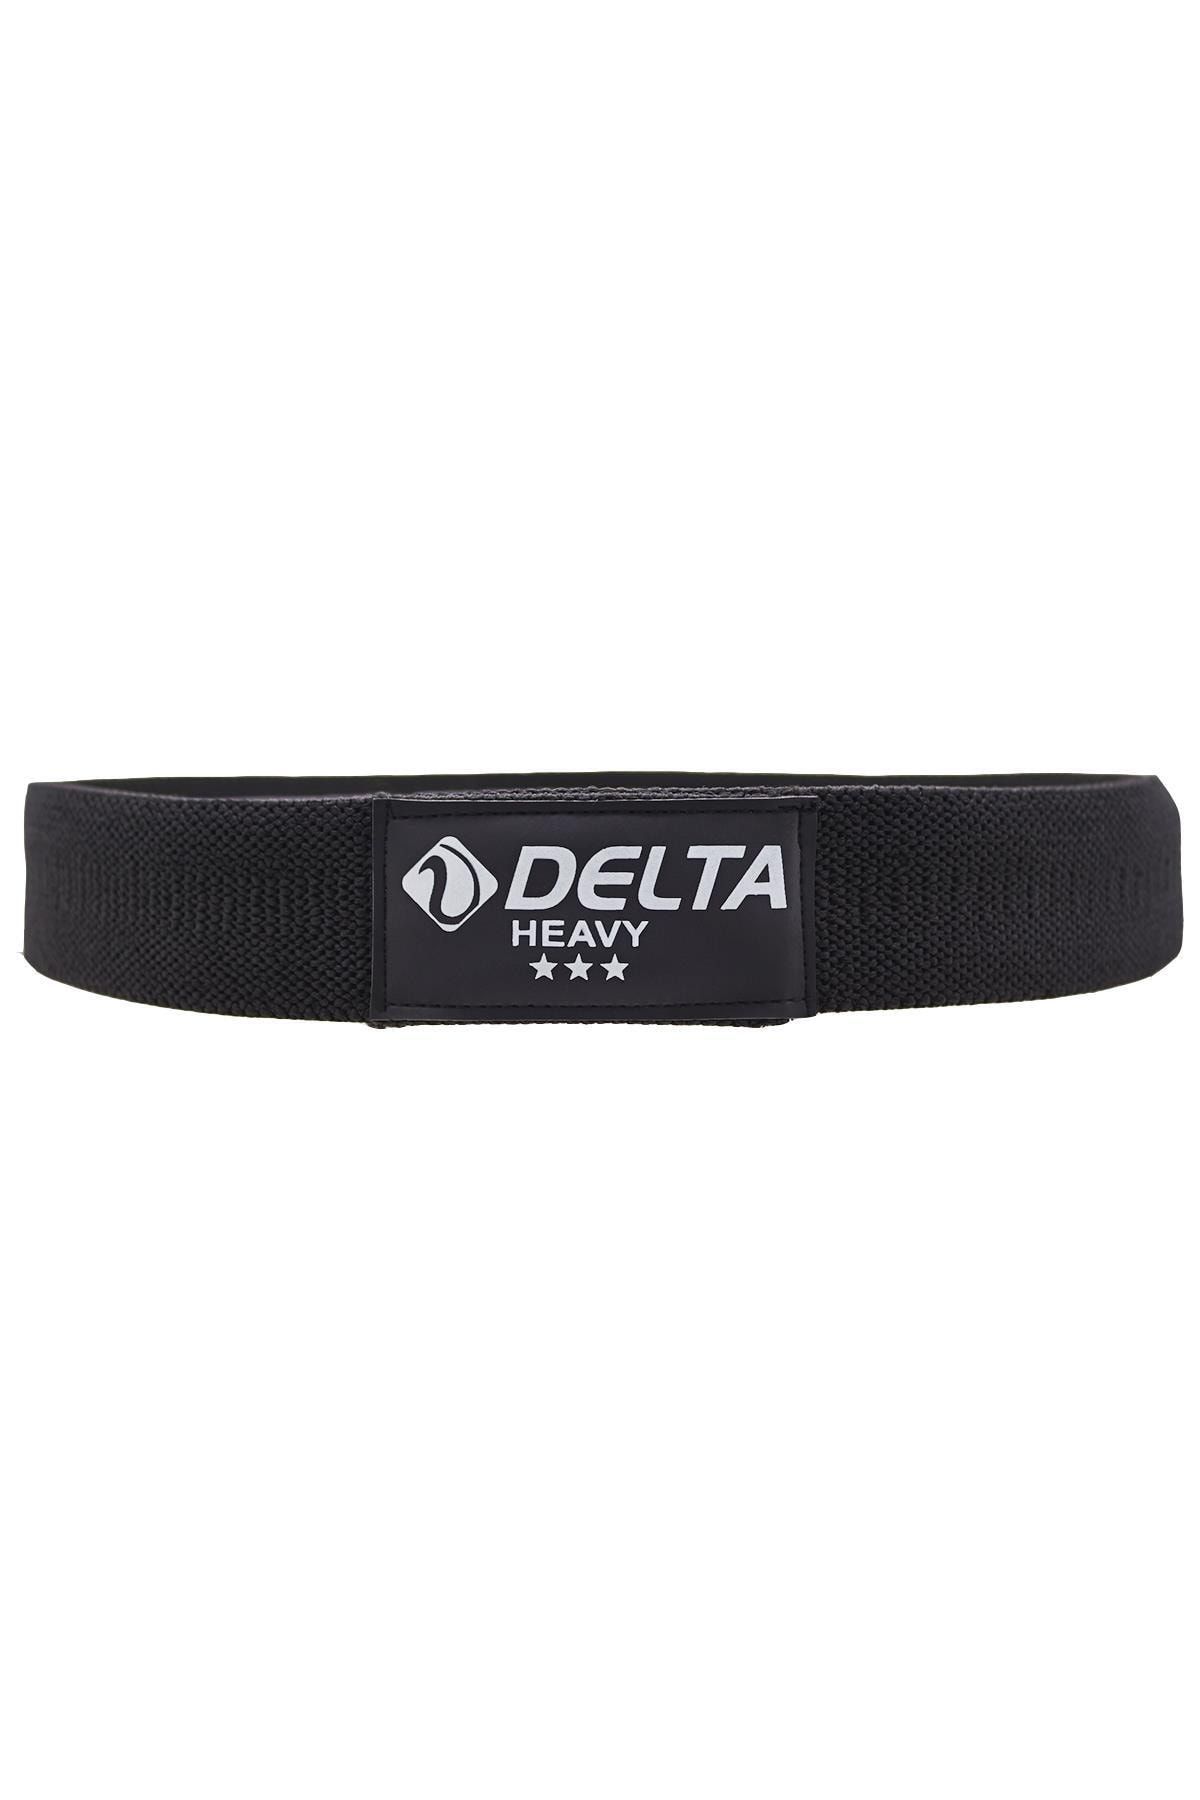 Delta Tam Sert Squat Bant Pilates Fitness Kalça Egzersizi Direnç Bandı Lastiği (Uç Kısmı Kapalı)